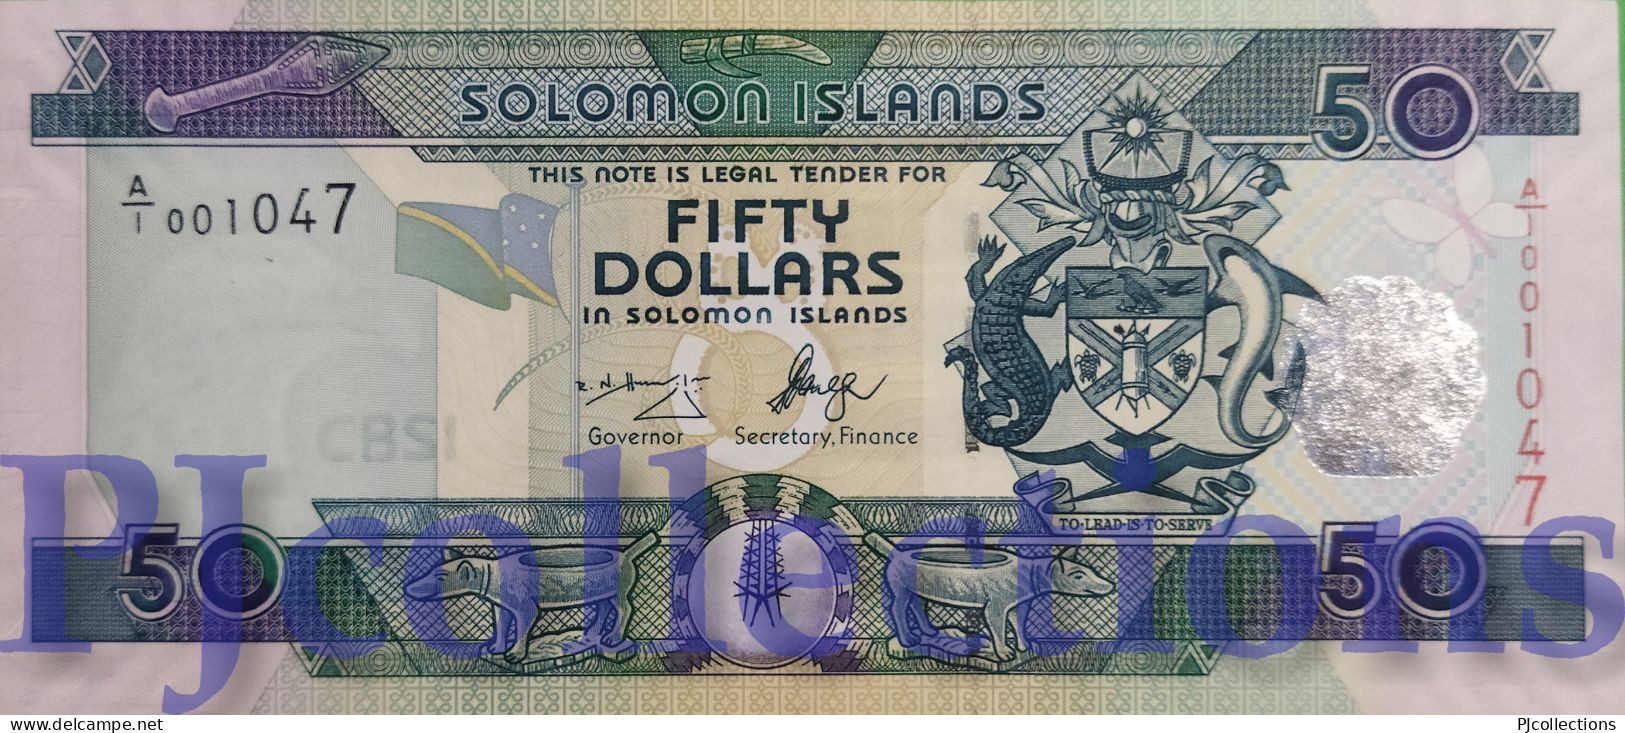 SOLOMON ISLANDS 50 DOLLARS 2004 PICK 29 UNC LOW SERIAL NUMBER "A/1 001038" - Salomons